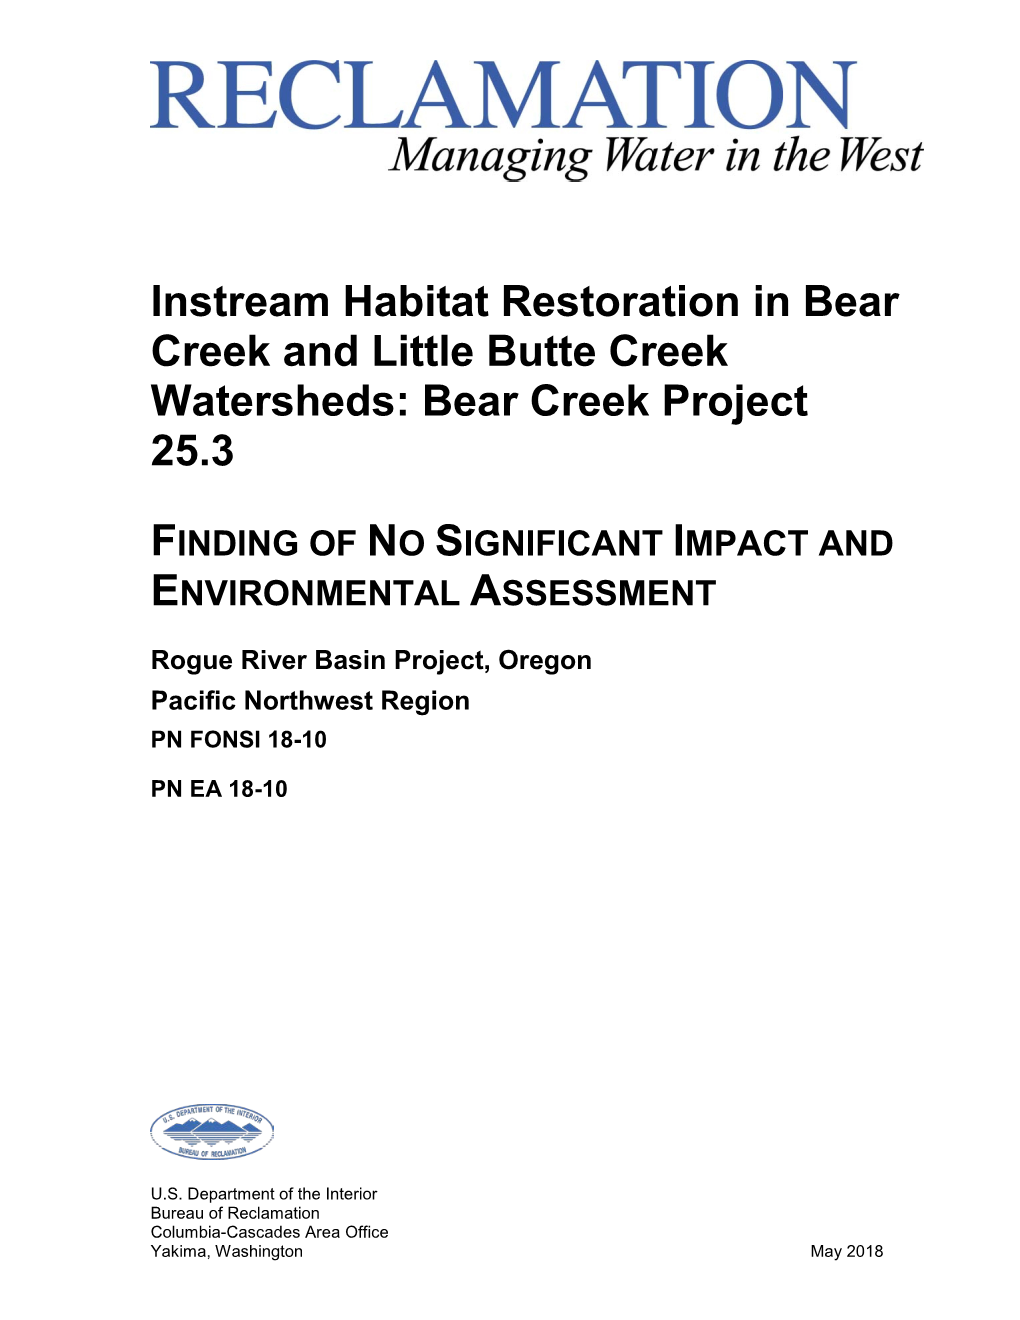 Instream Habitat Restoration in Bear Creek and Little Creek Watersheds